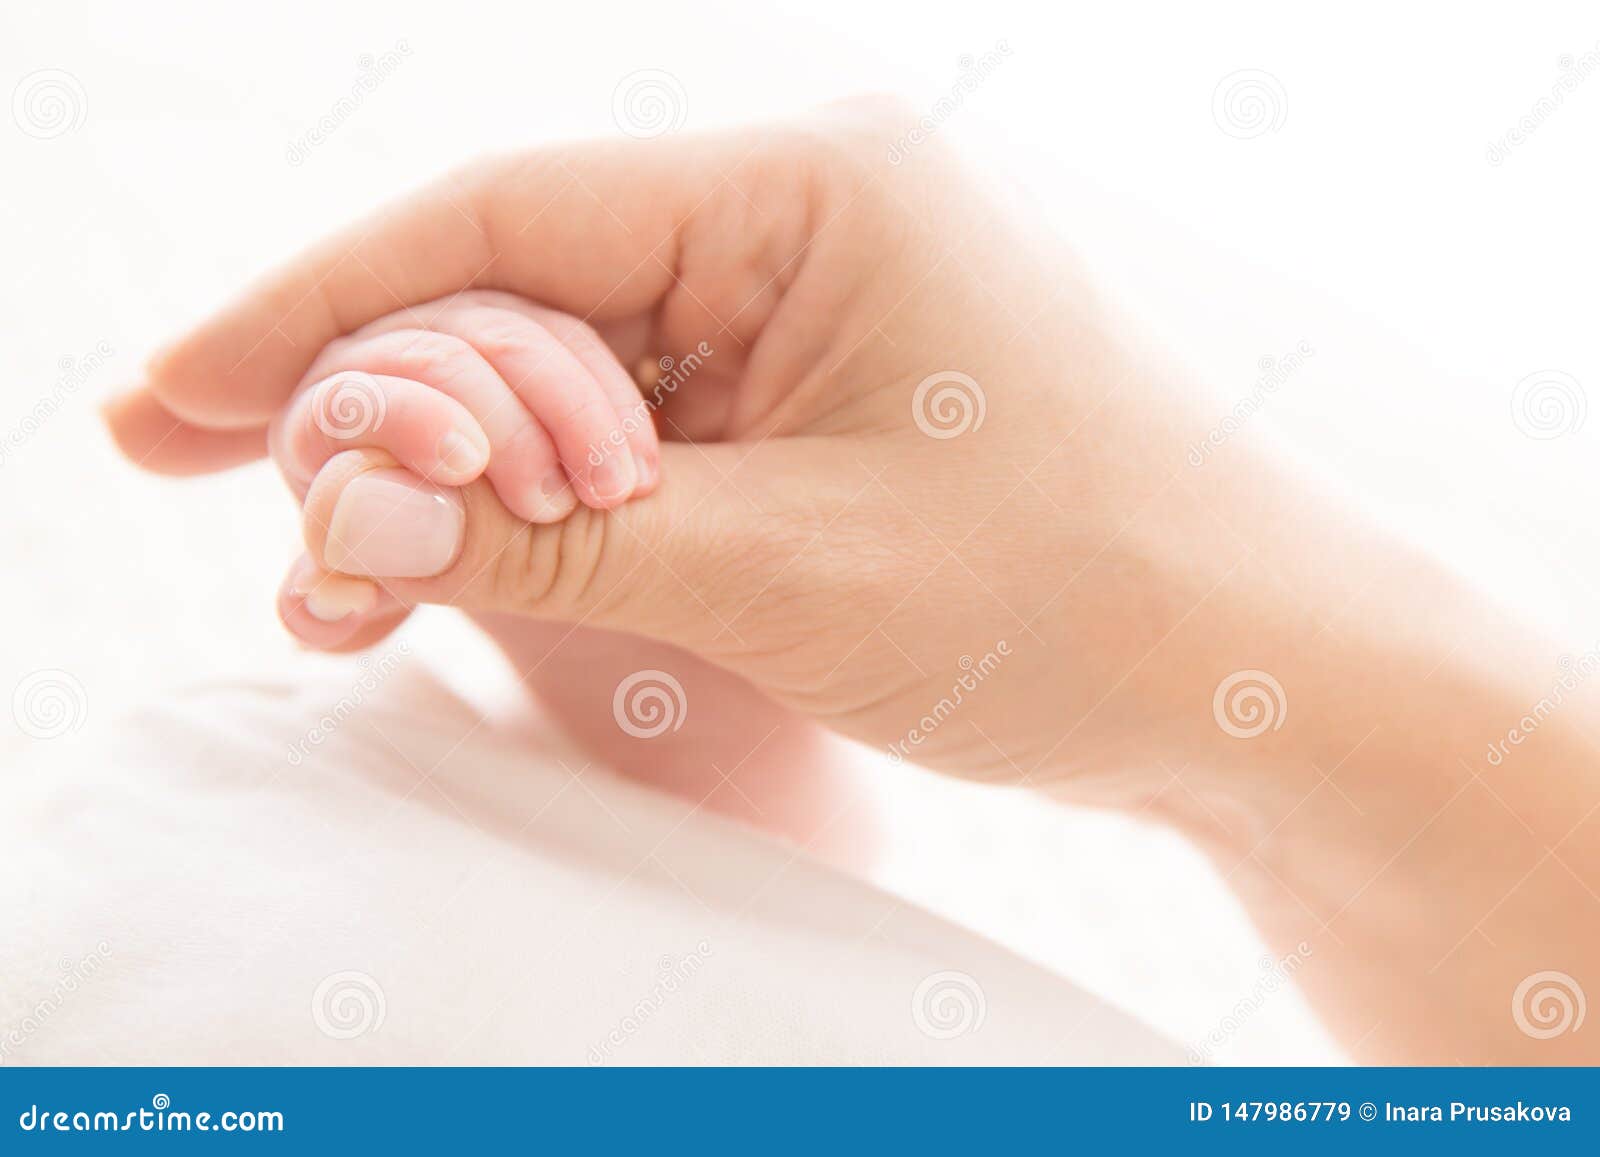 newborn baby hand holding mother, mom hold new born kid